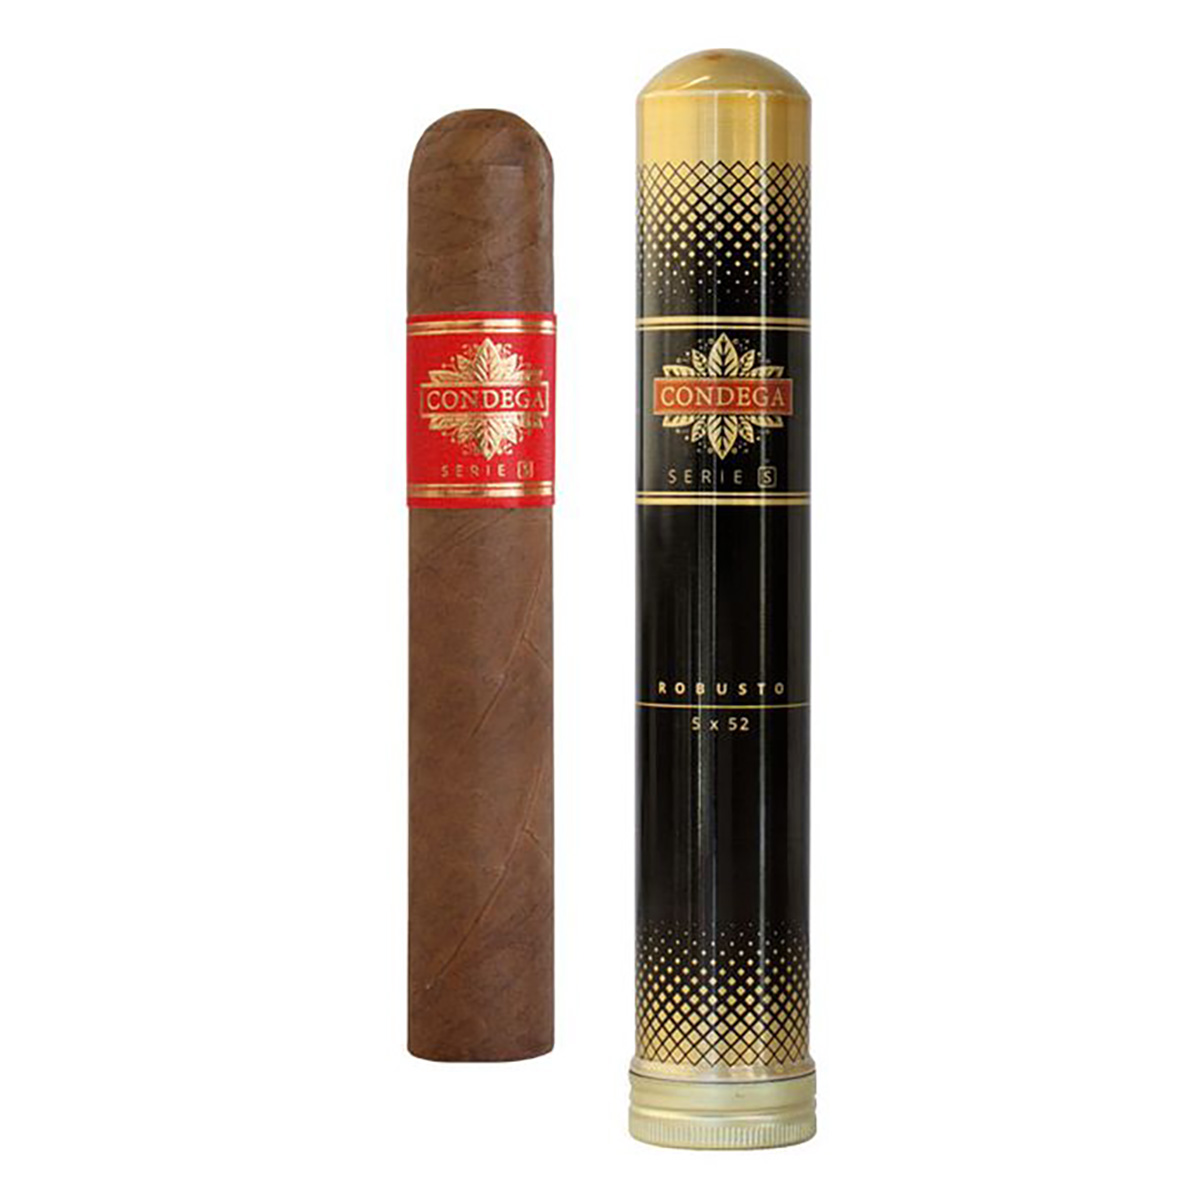 New World Cigar Sampler Pack - Nicaragua (Medium)